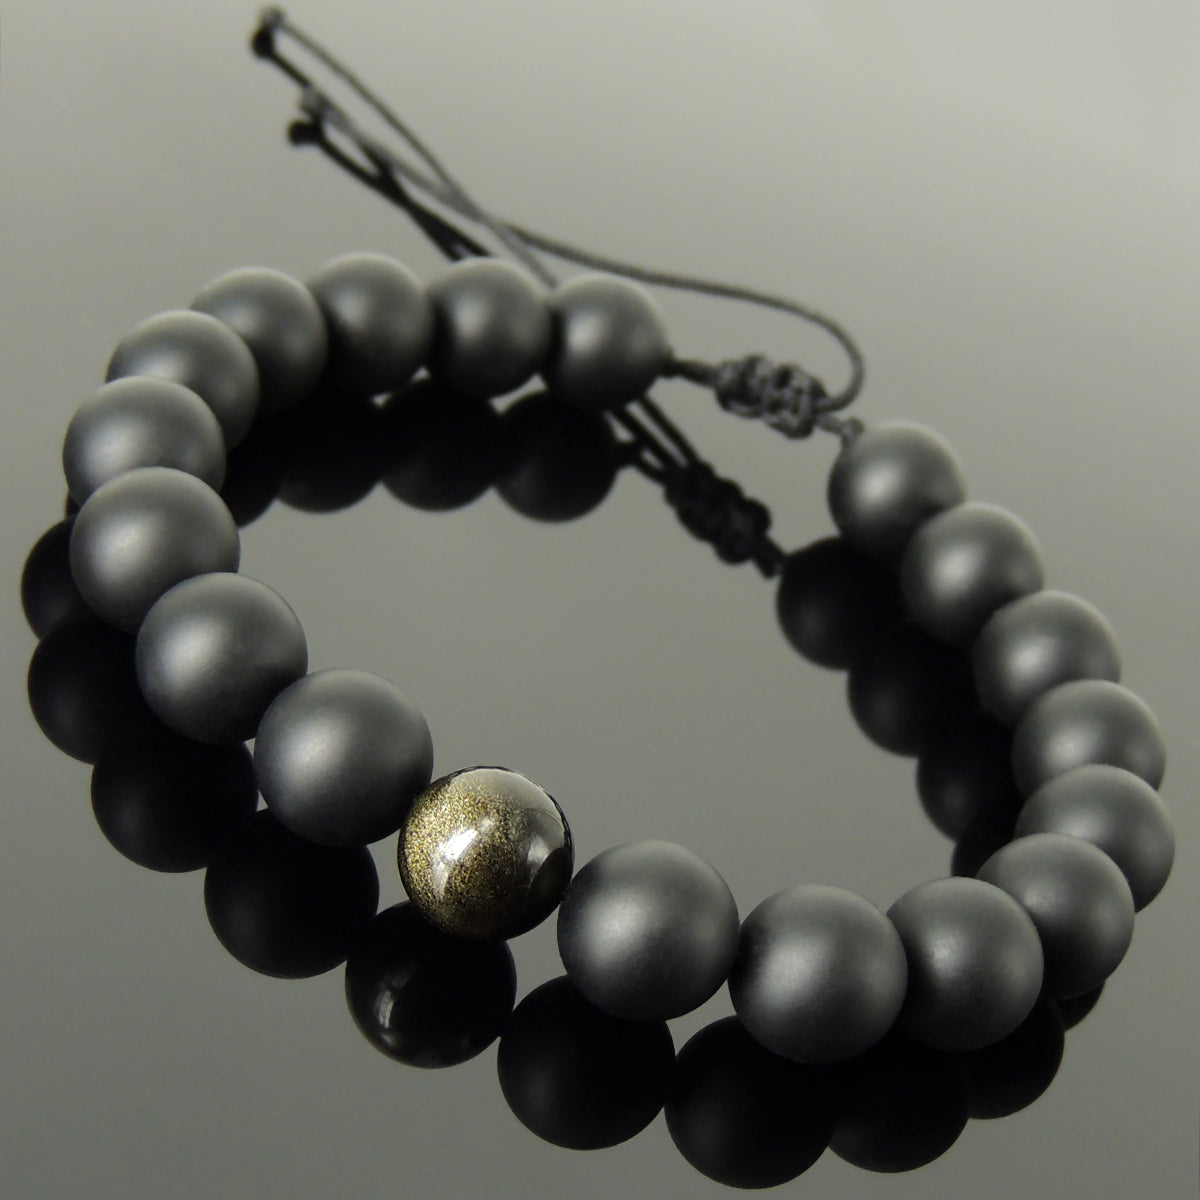 Healing Zen Gemstone Jewelry - Men's Women's Handmade Braided Bracelet Protection, Casual Wear with 10mm Golden Obsidian, Matte Black Onyx, Adjustable Drawstring BR1740